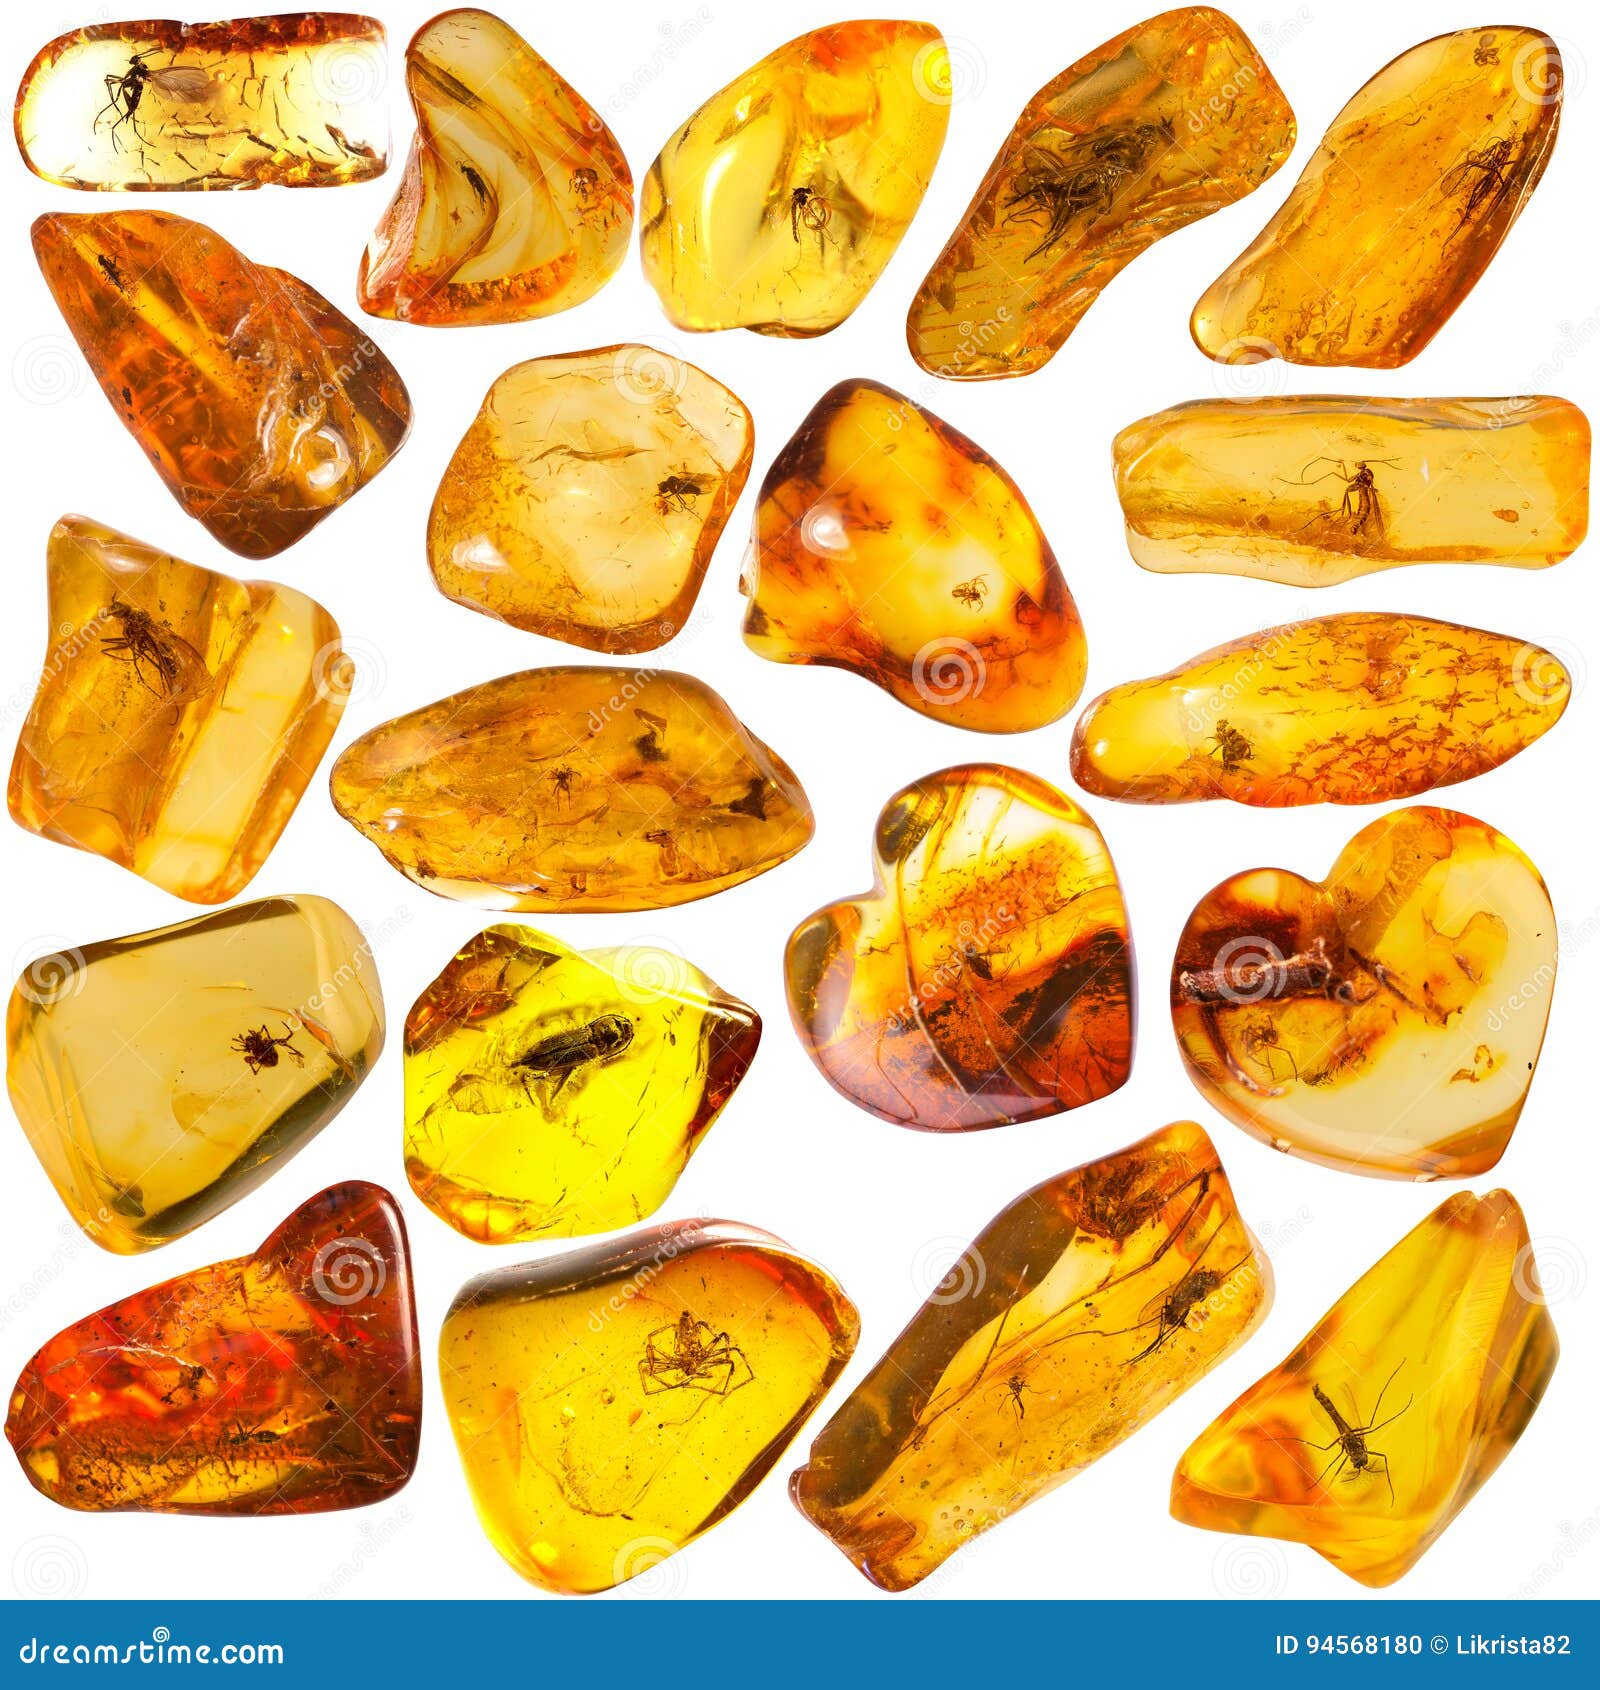 baltic amber stone set of 20